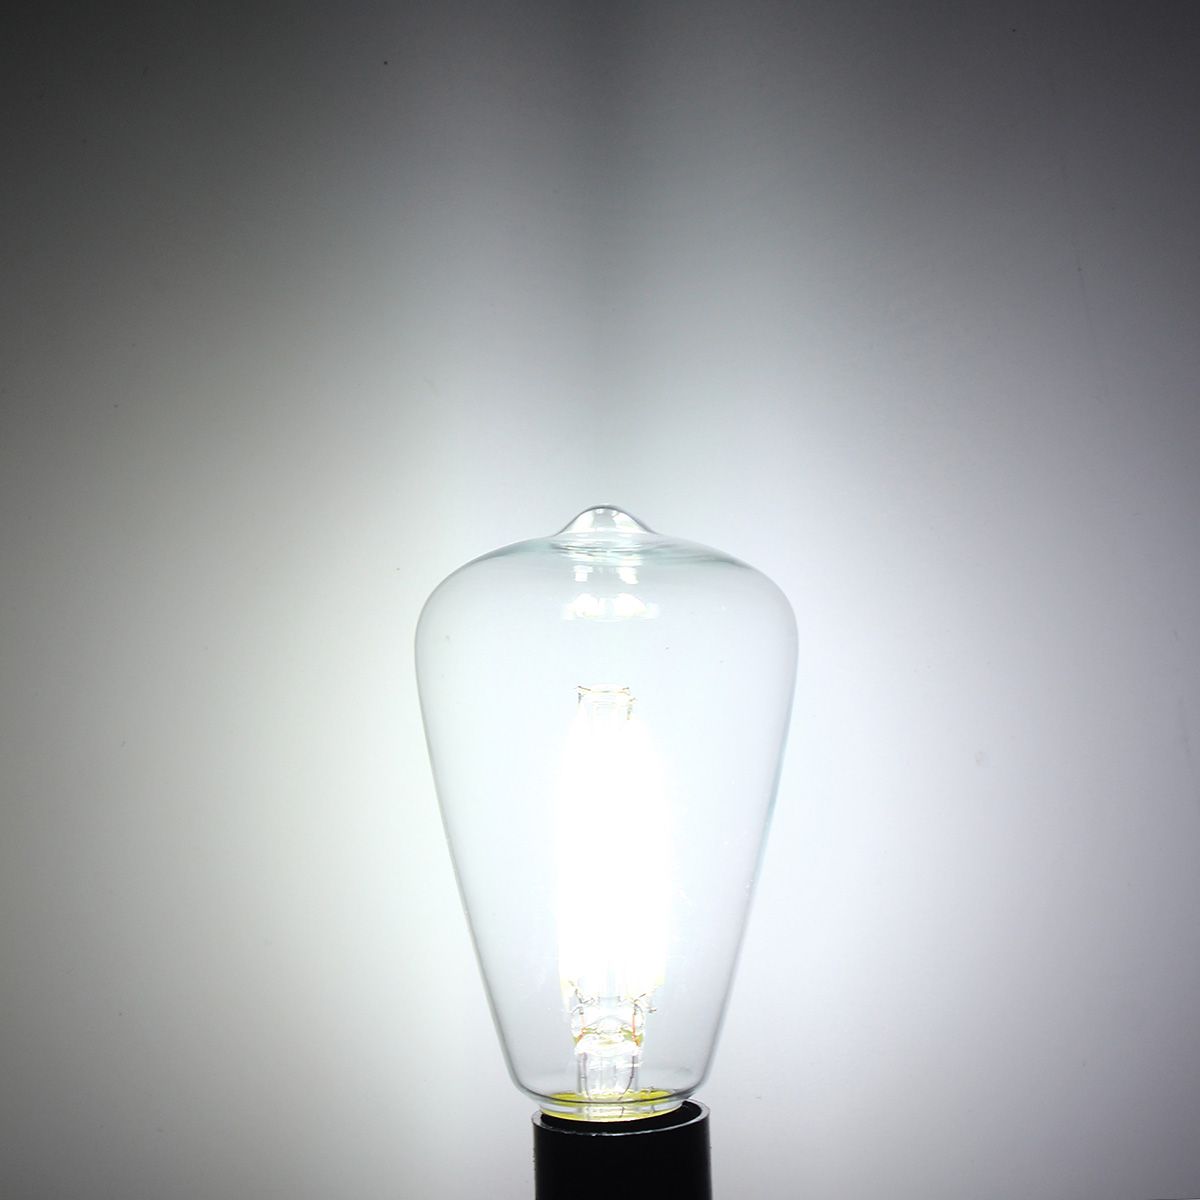 Retro-E12-4W-Edison-Filament-Bulb-LED-Warm-White-Pure-White-Light-Lamp-Candle-AC-110V-1065958